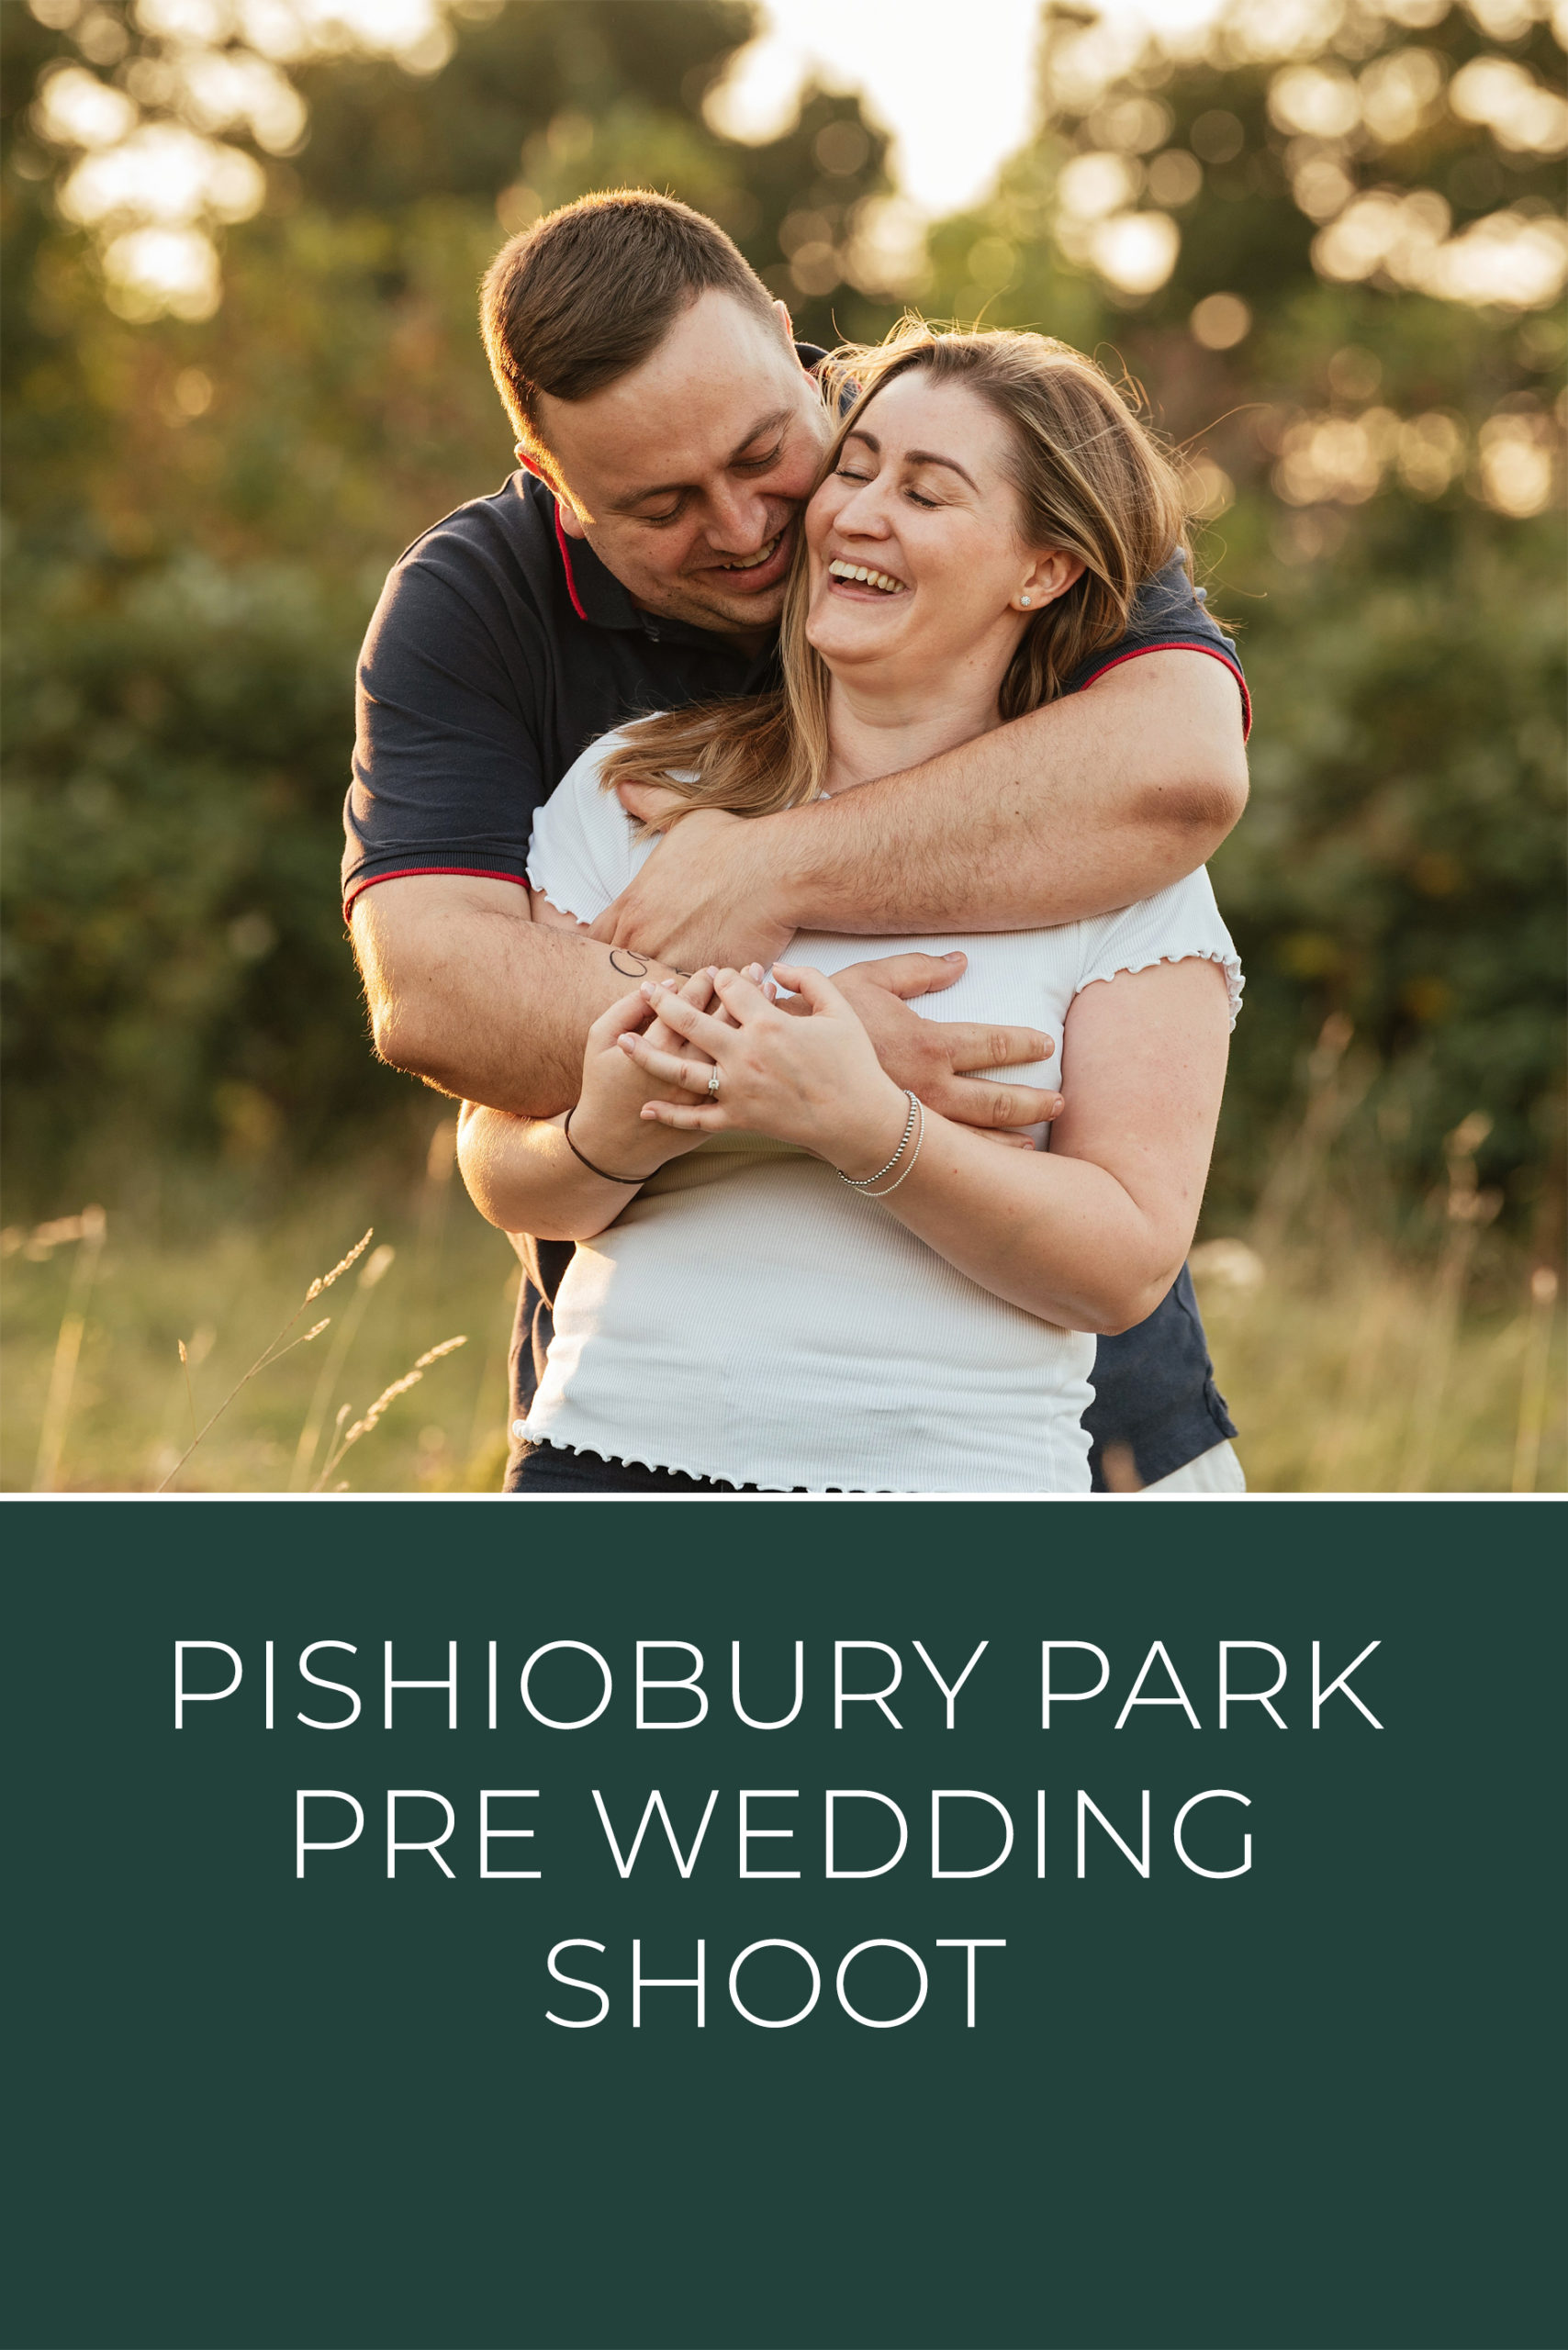 Pishiobury Park Pre Wedding Shoot Pinterest Graphic